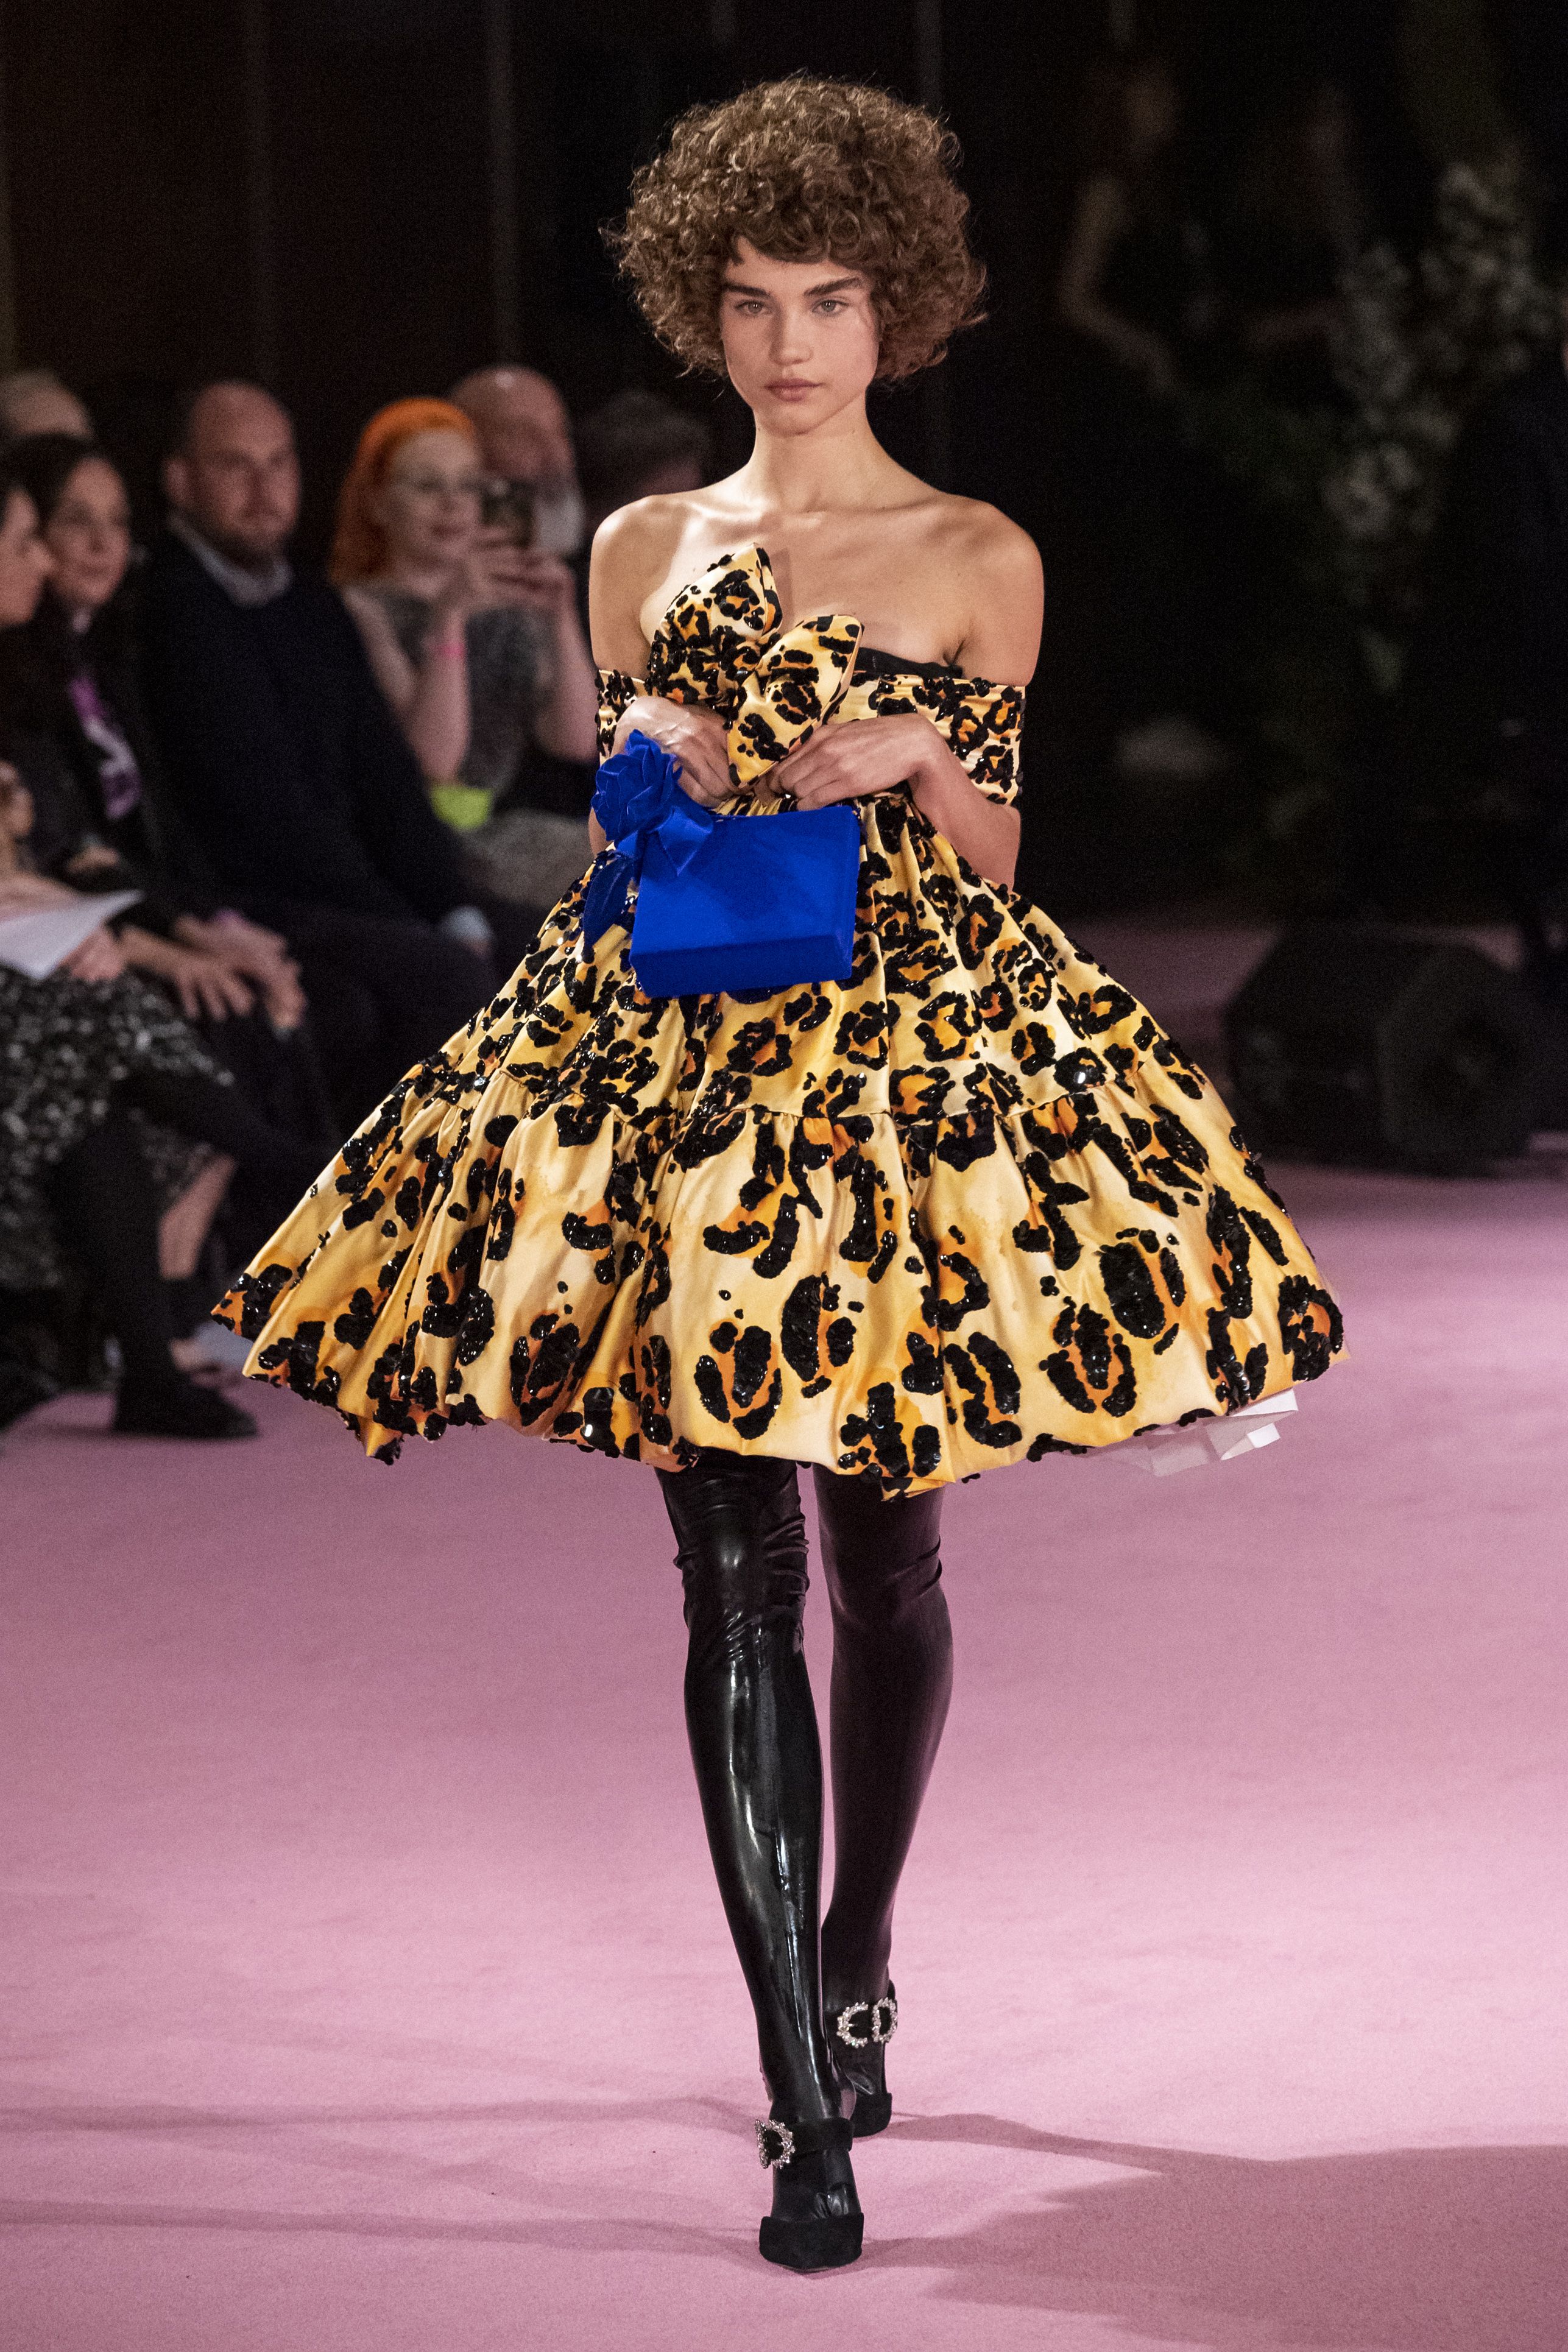 leopard skin dresses style